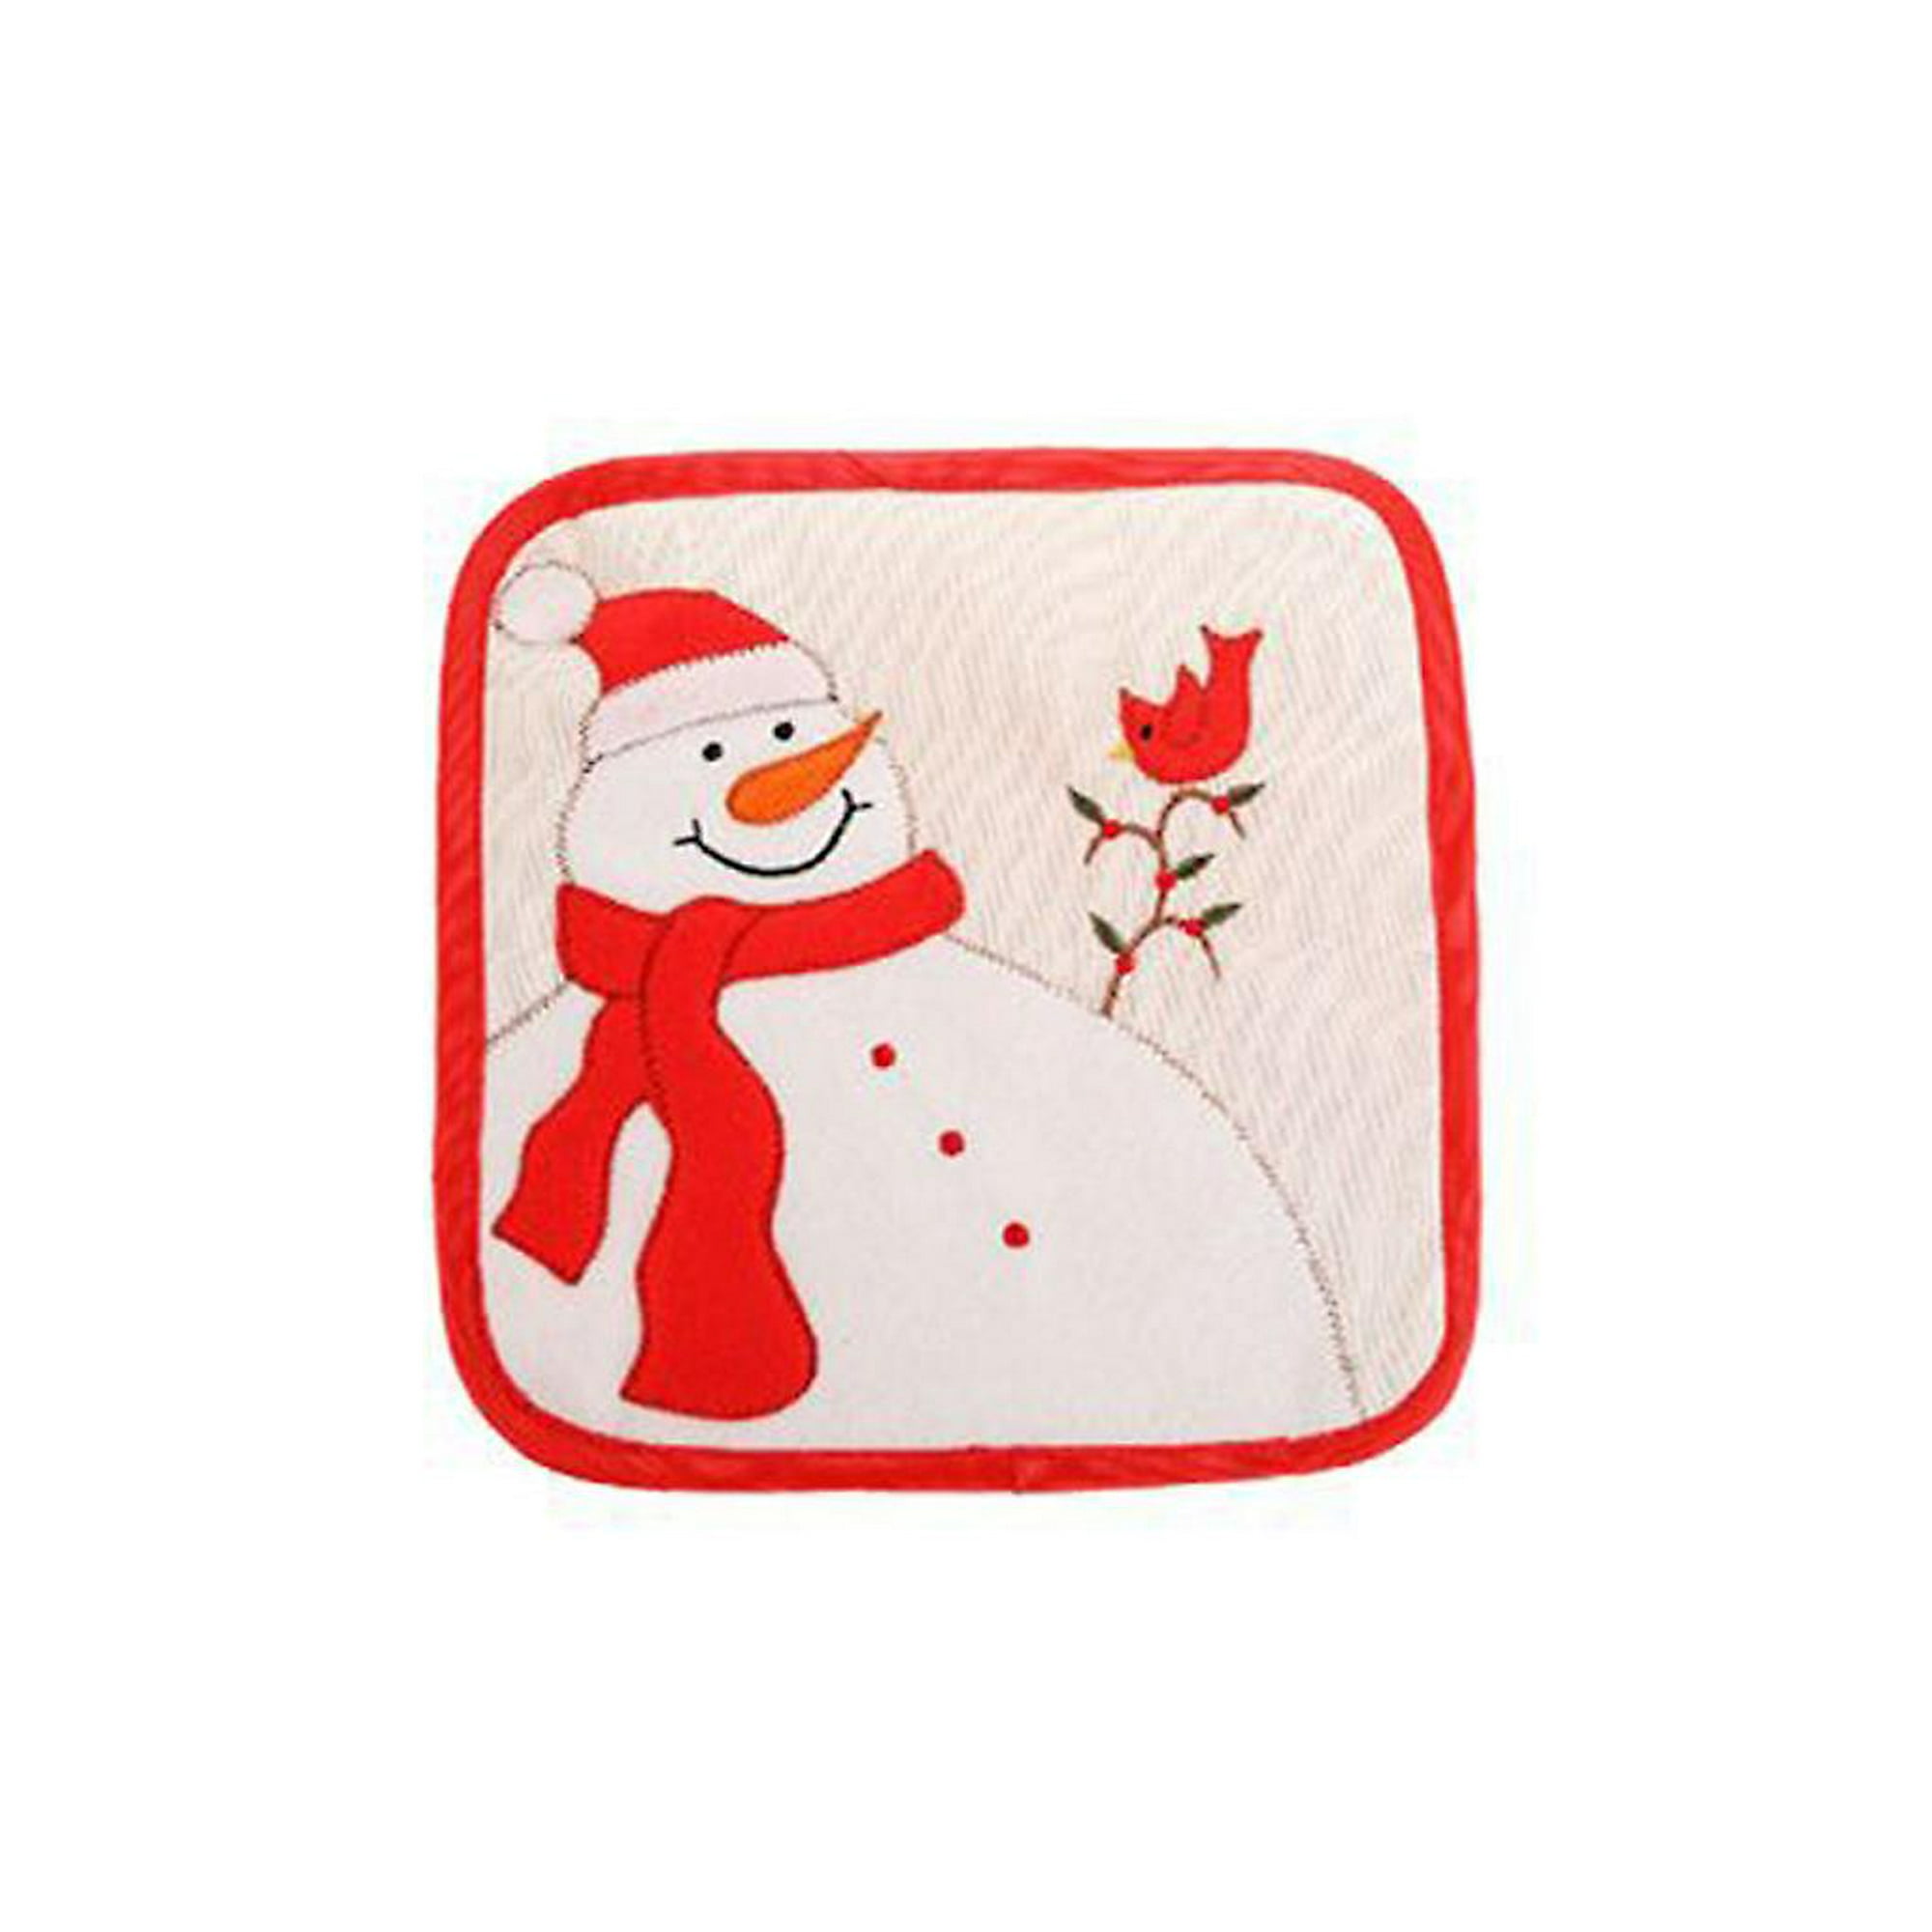 Comprar 1 Juego de guantes para hornear, guantes navideños con patrón de  dibujos animados, guantes para horno resistentes al calor con alfombrilla  para cocina casera